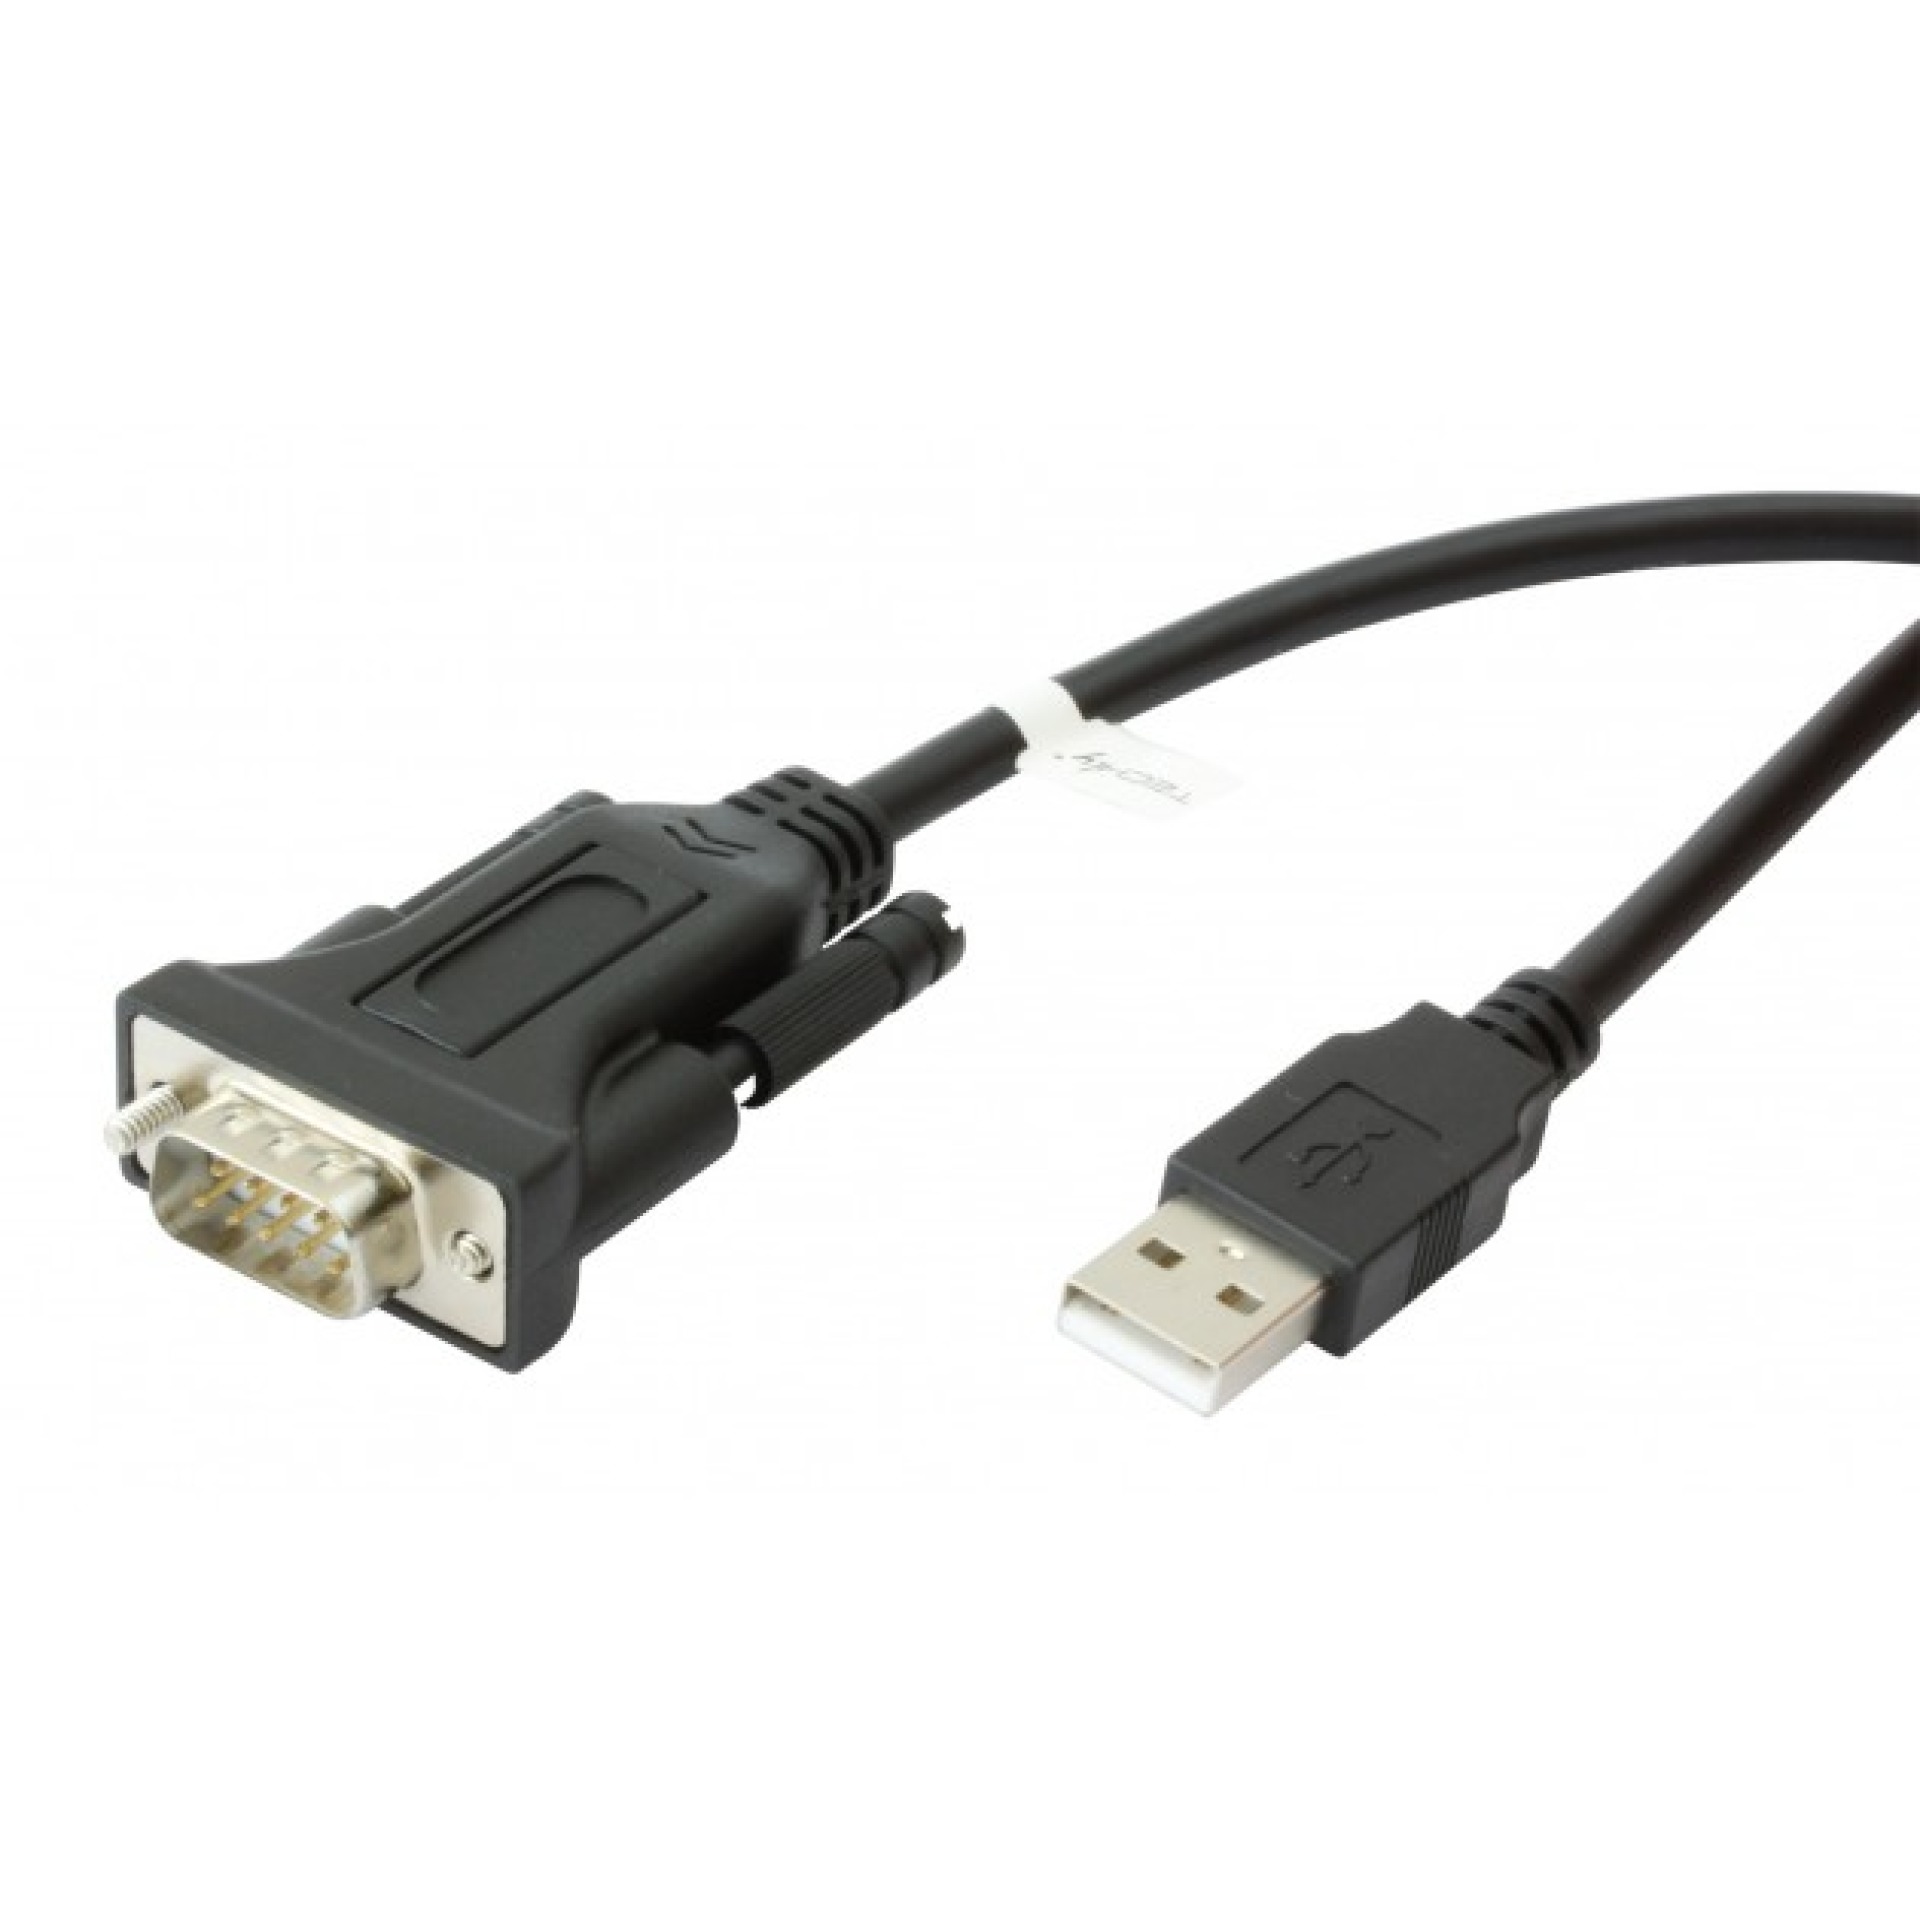 USB2.0 Konverterkabel auf Dsub9/RS-232, ,1,5 m